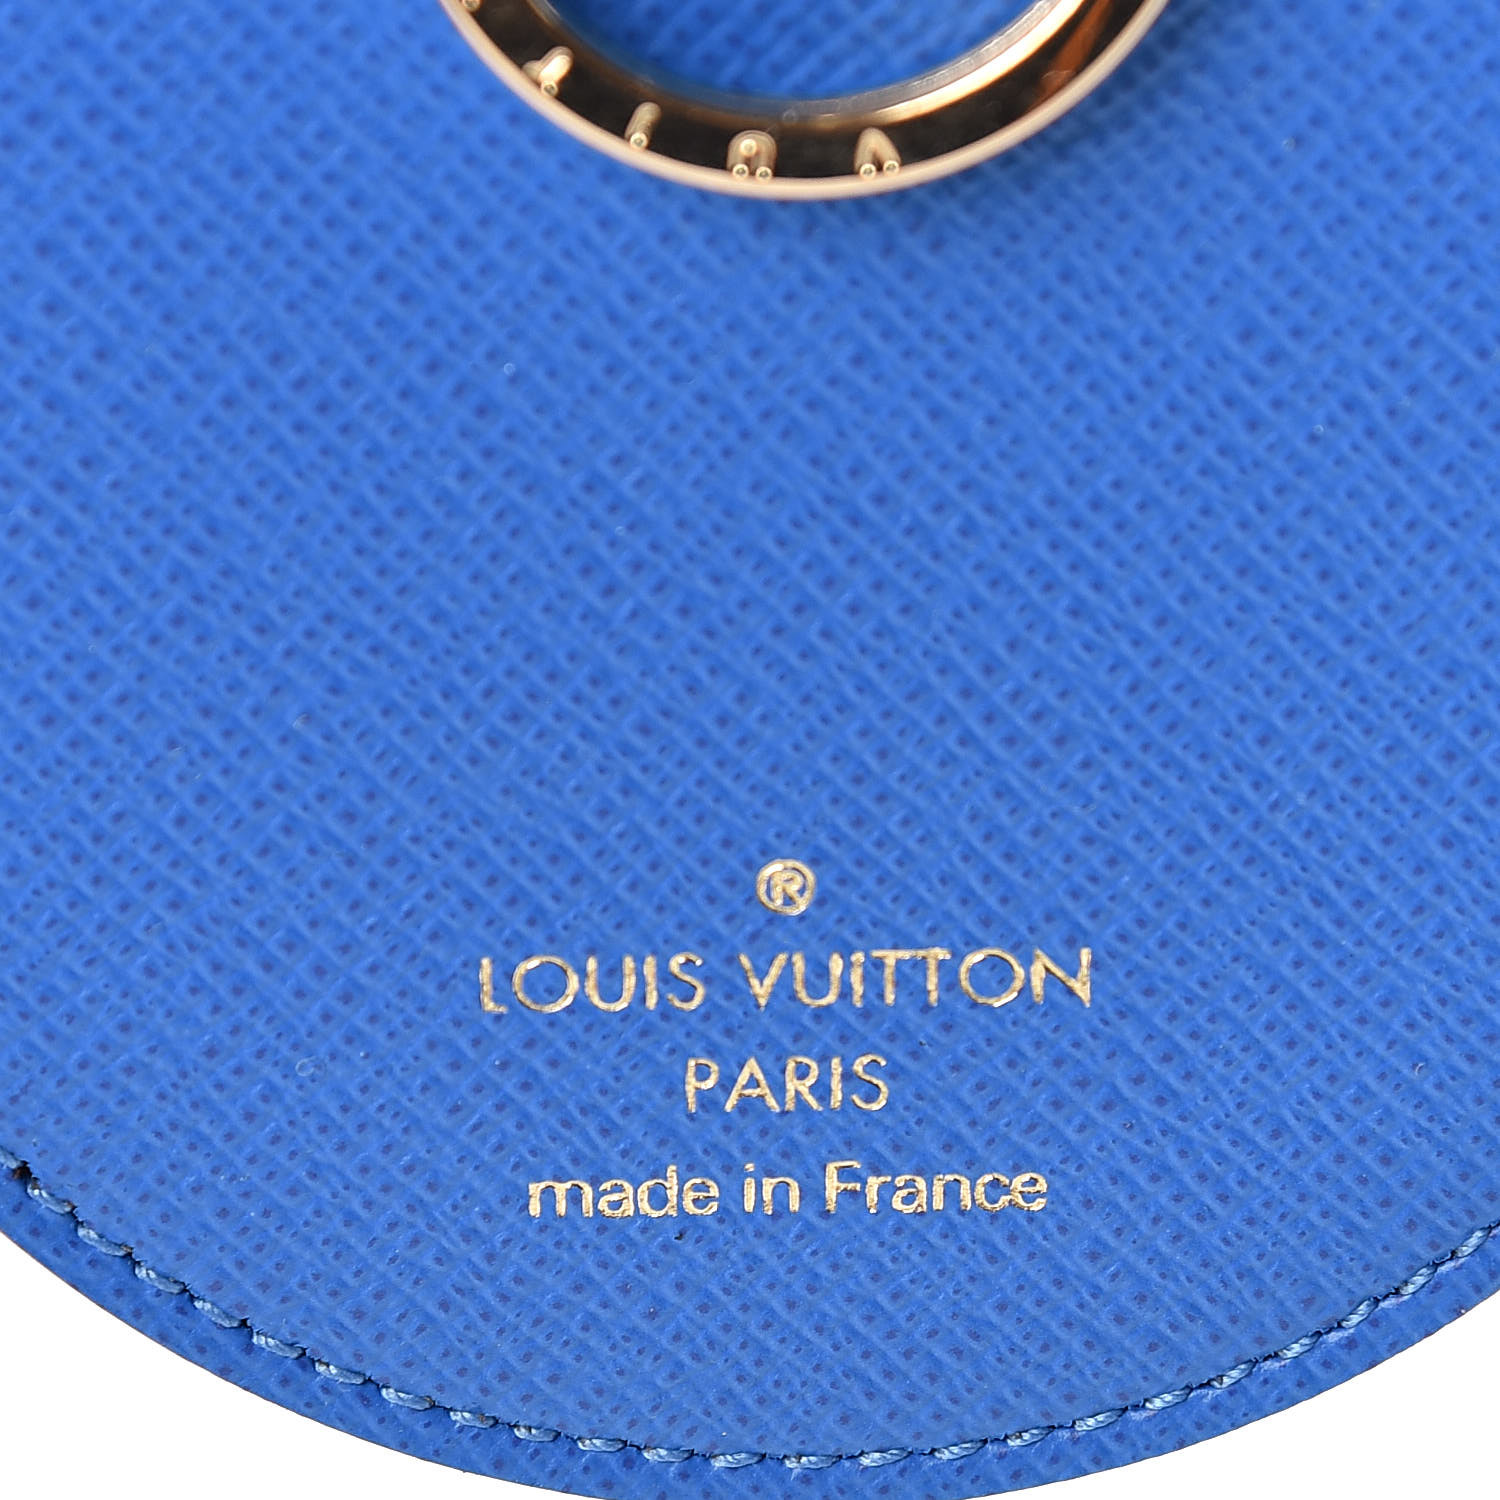 LOUIS VUITTON Monogram 2019 Christmas Animation Venice Bag Charm Key Ring 459496